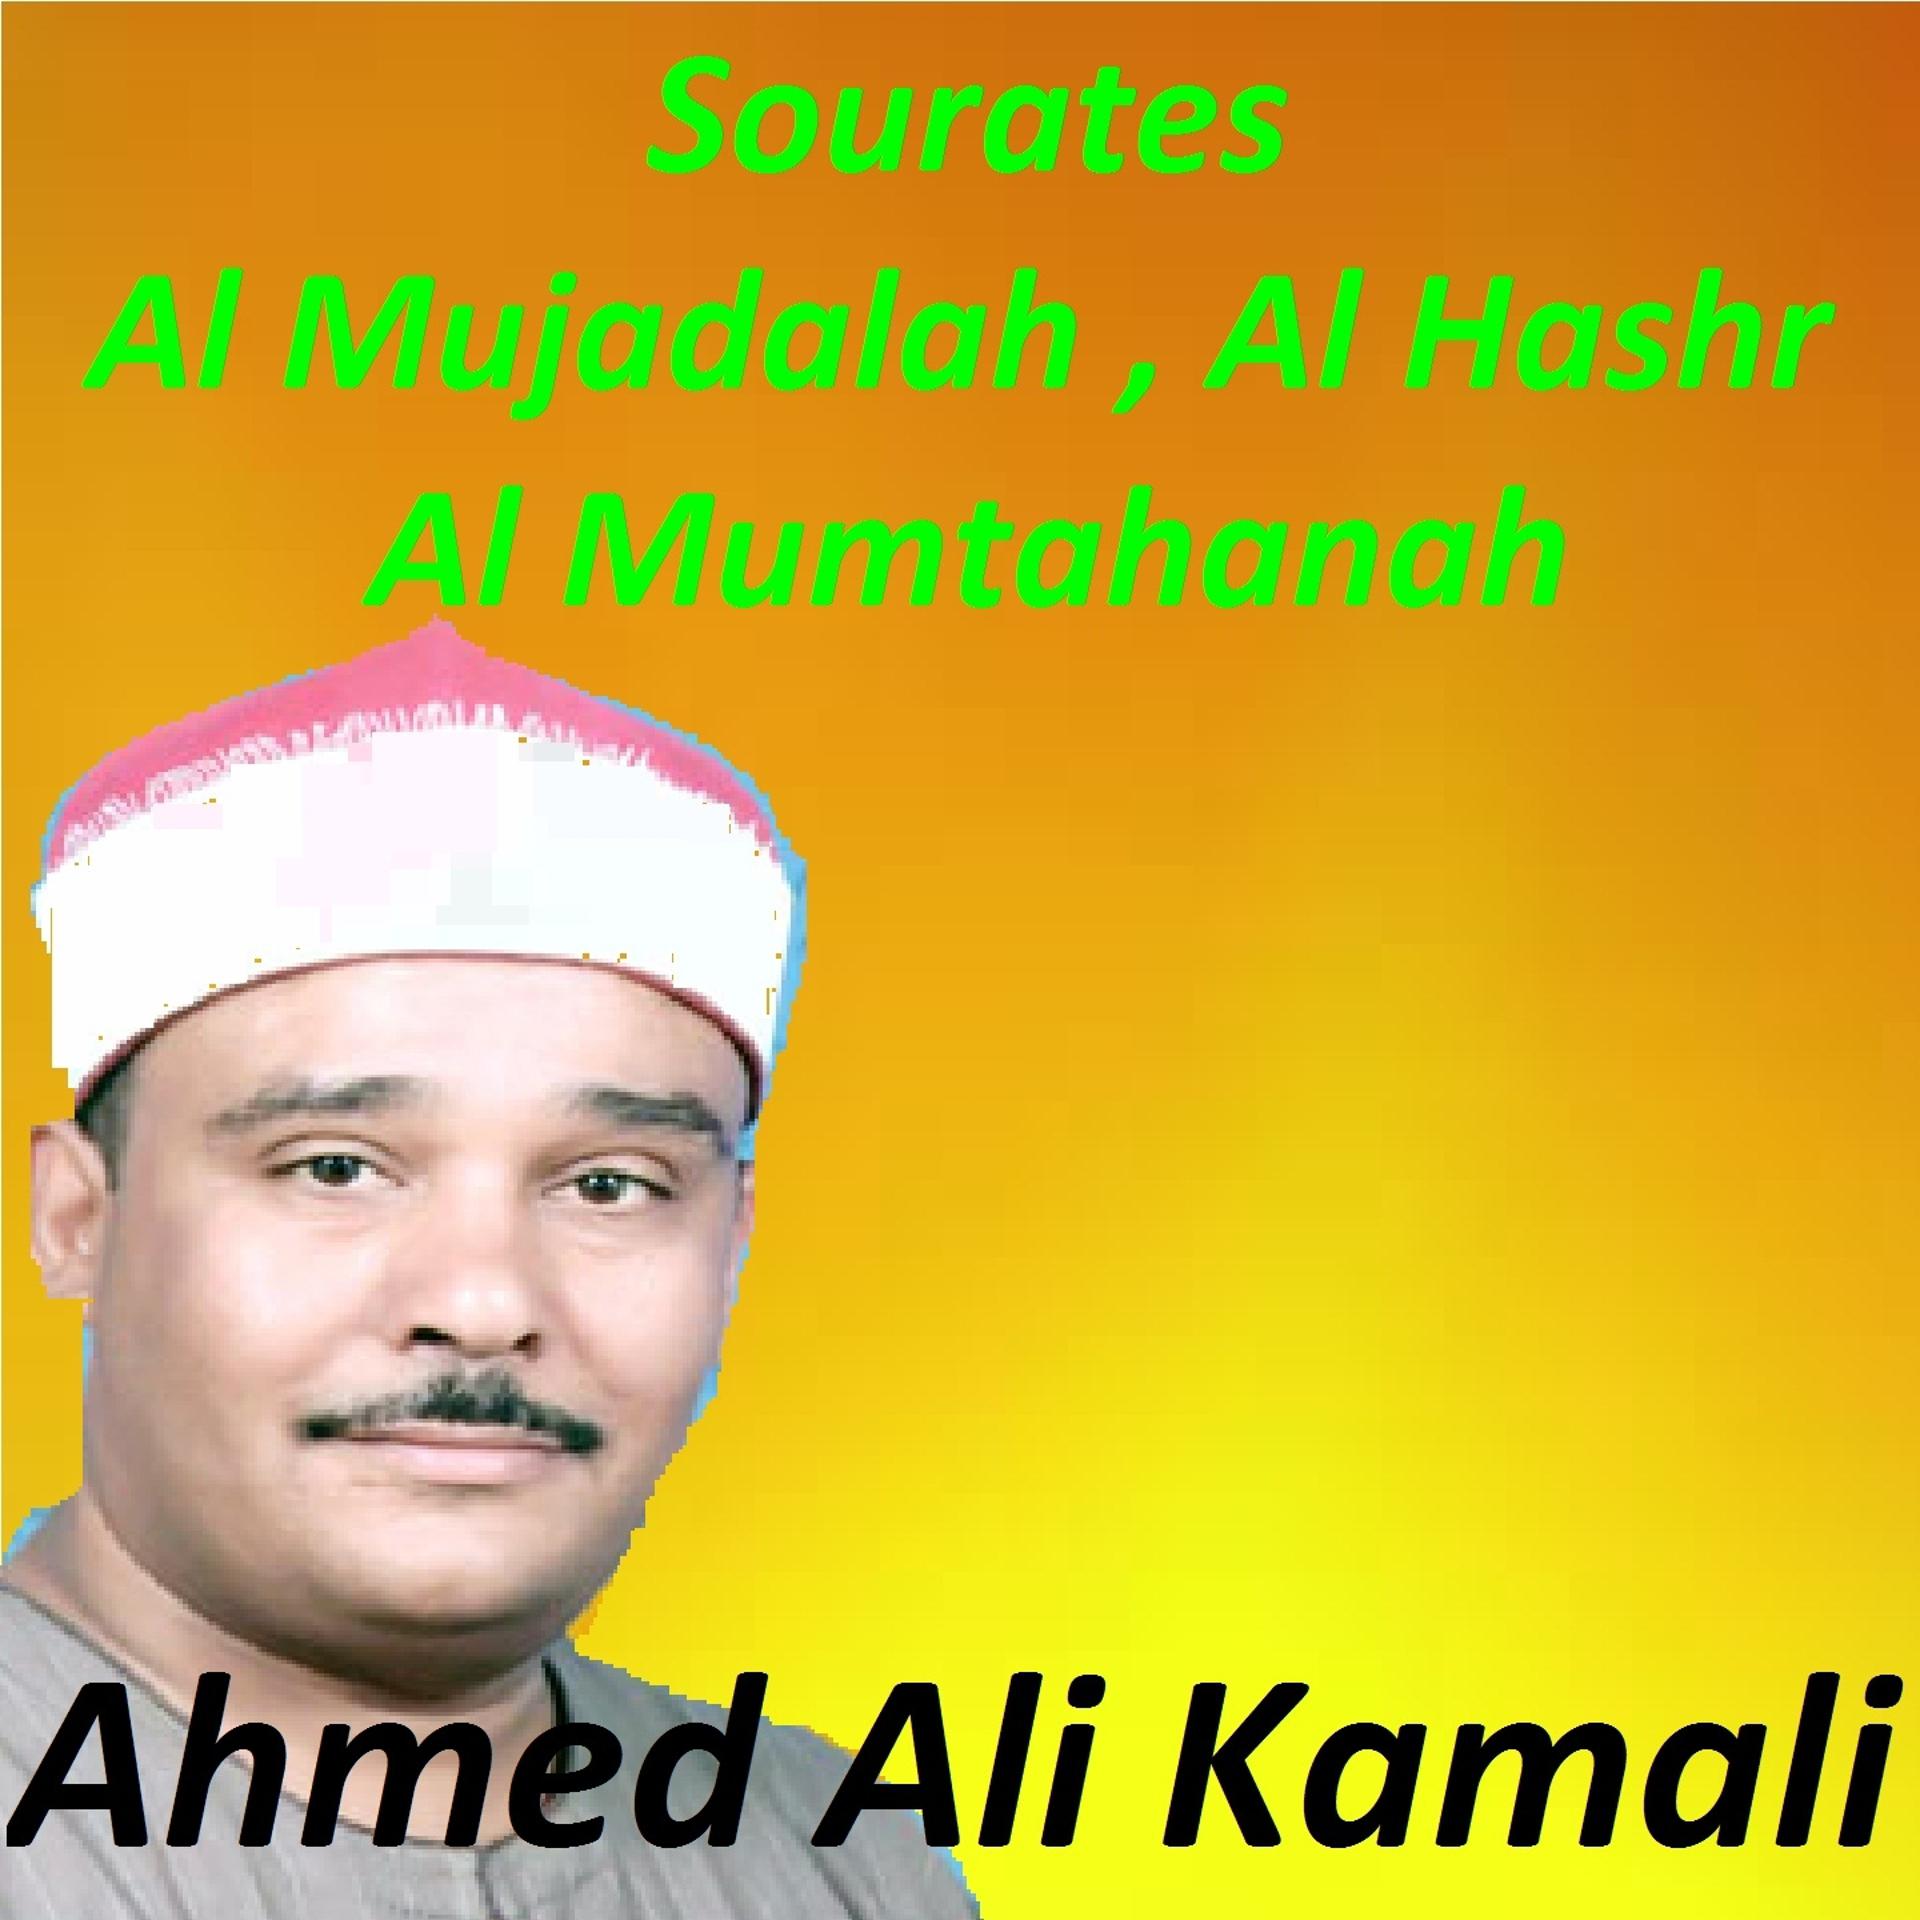 Постер альбома Sourates Al Mujadalah, Al Hashr, Al Mumtahanah